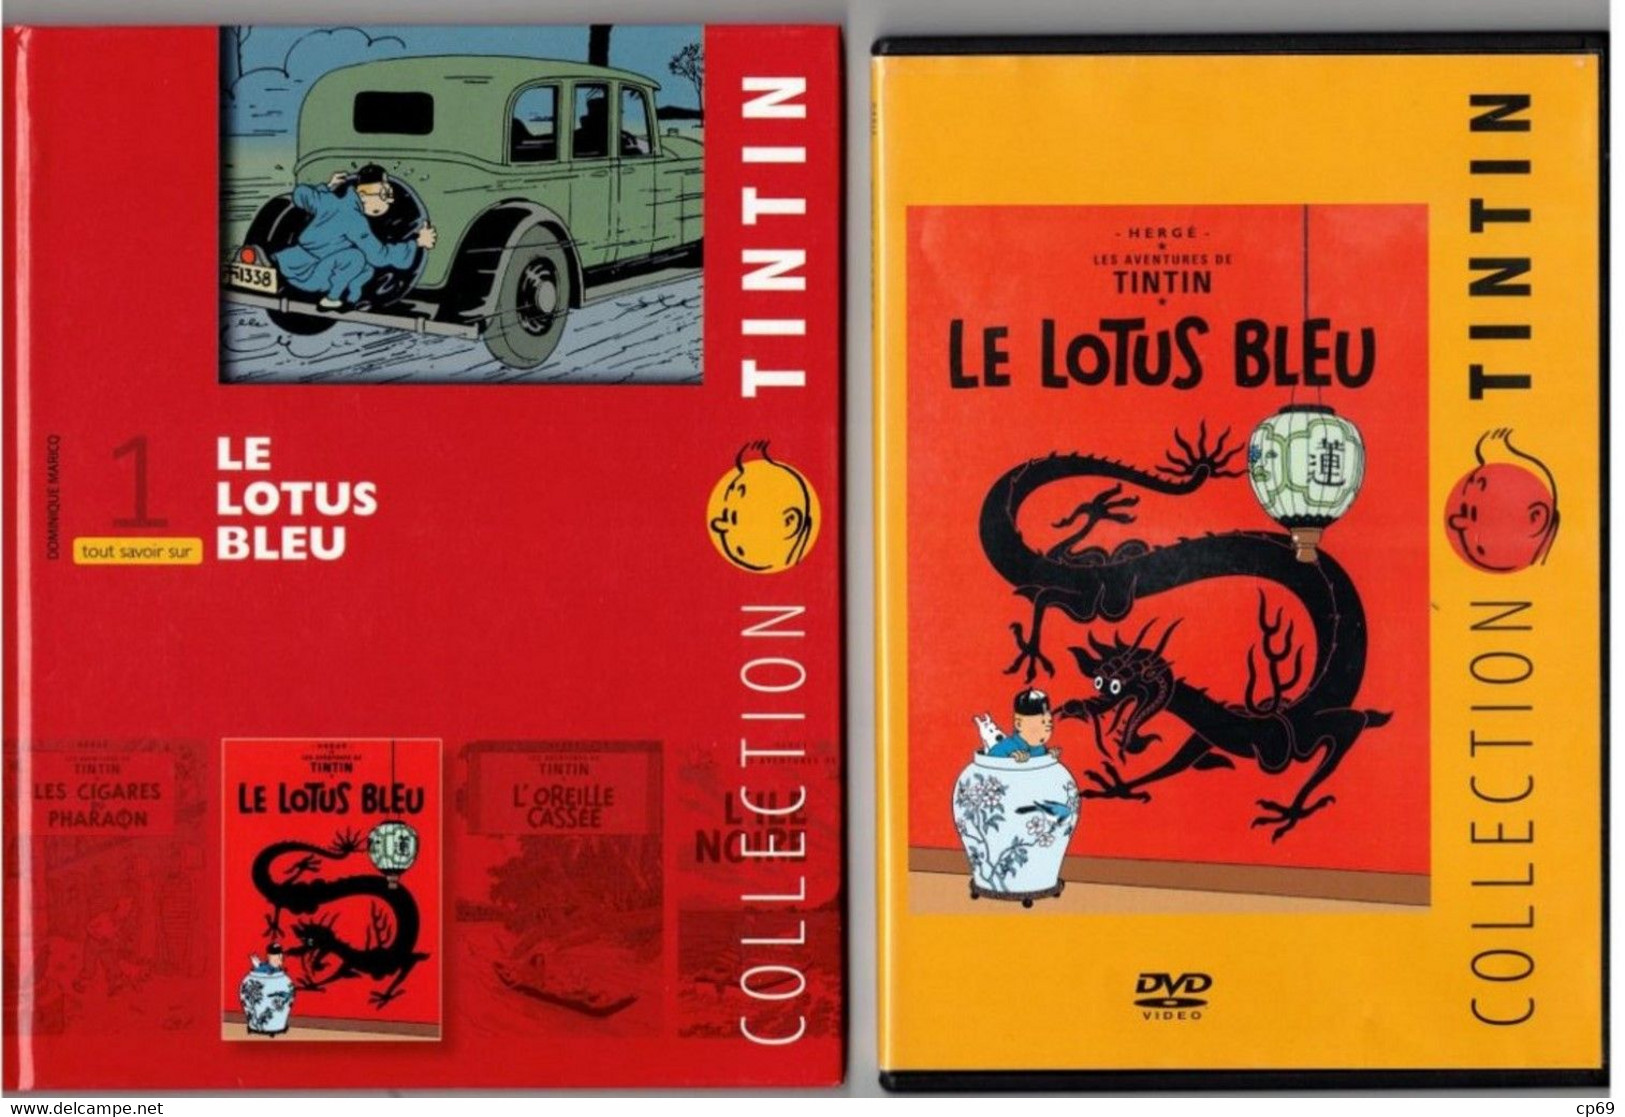 Tintin Hergé / Moulinsart 2010 Milou Chien Dog Cane Le Lotus Bleu N°1 DVD + Livret Explicatif En B.Etat - Dibujos Animados